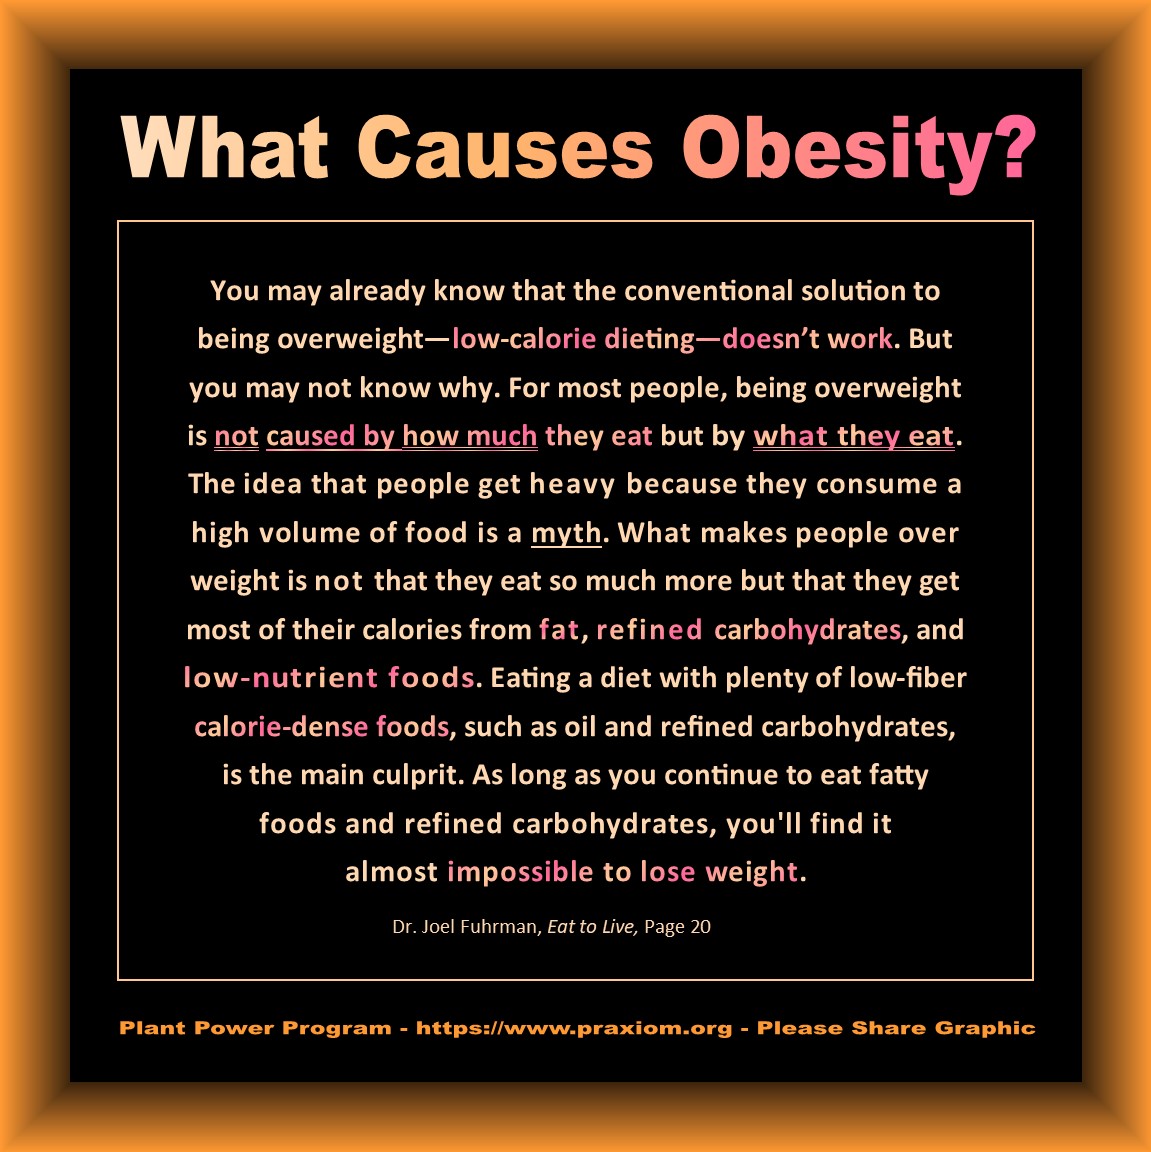 What Causes Obesity? Dr. Joel Fuhrman